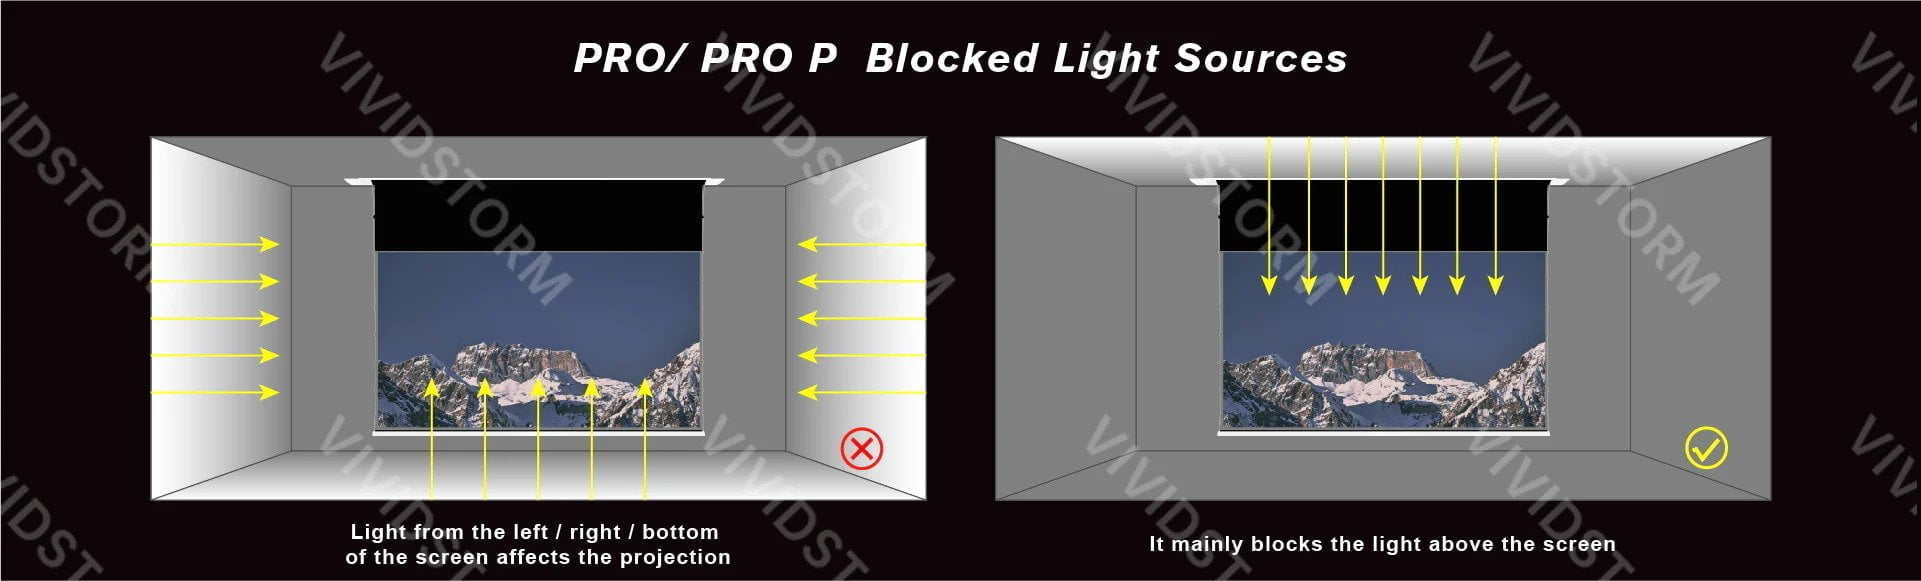 VIVIDSTORM PHANTOM Recessed In-Ceiling Motorized Tension UST ALR Projector Screen